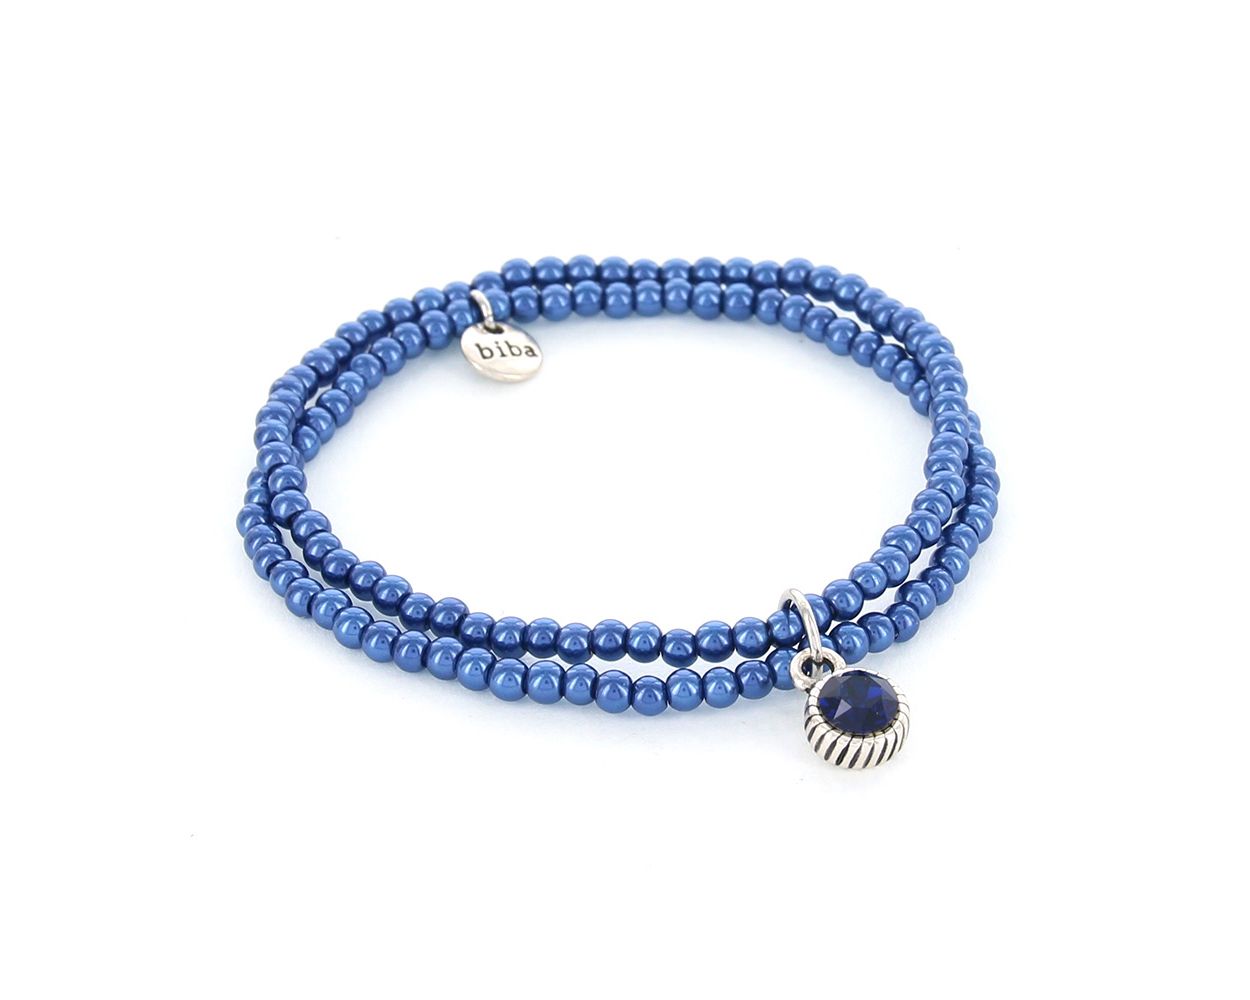 Biba armband Pearl Crystal Blue - 51345